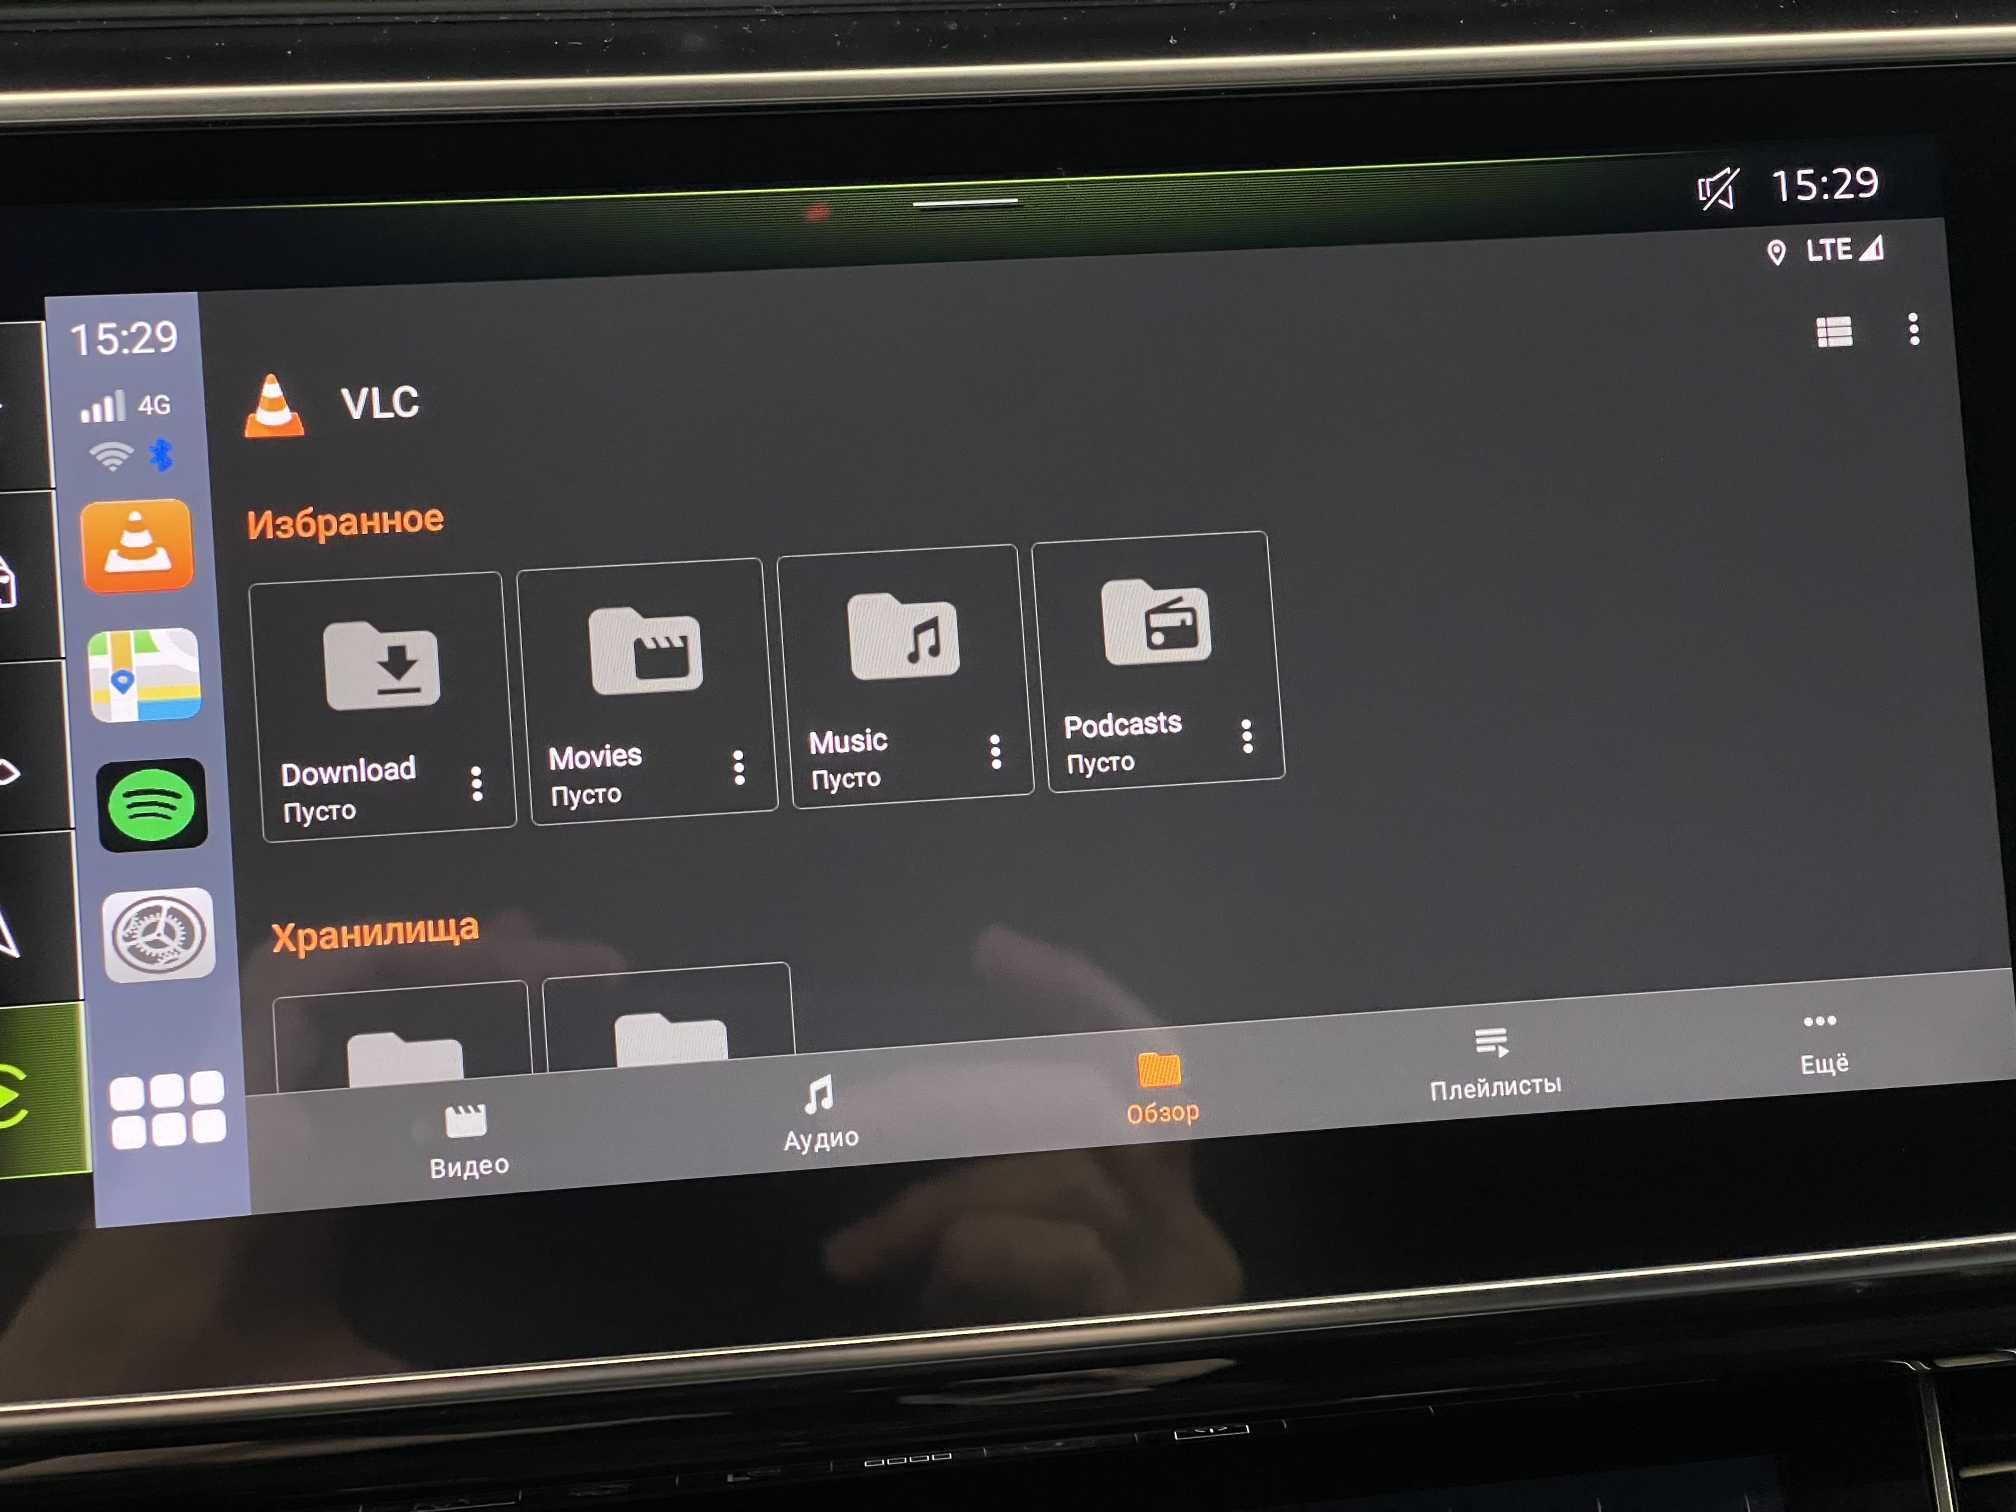 Carplay Android Box в автомобиль / Max APM988 4/64GB LTE WiFi BT